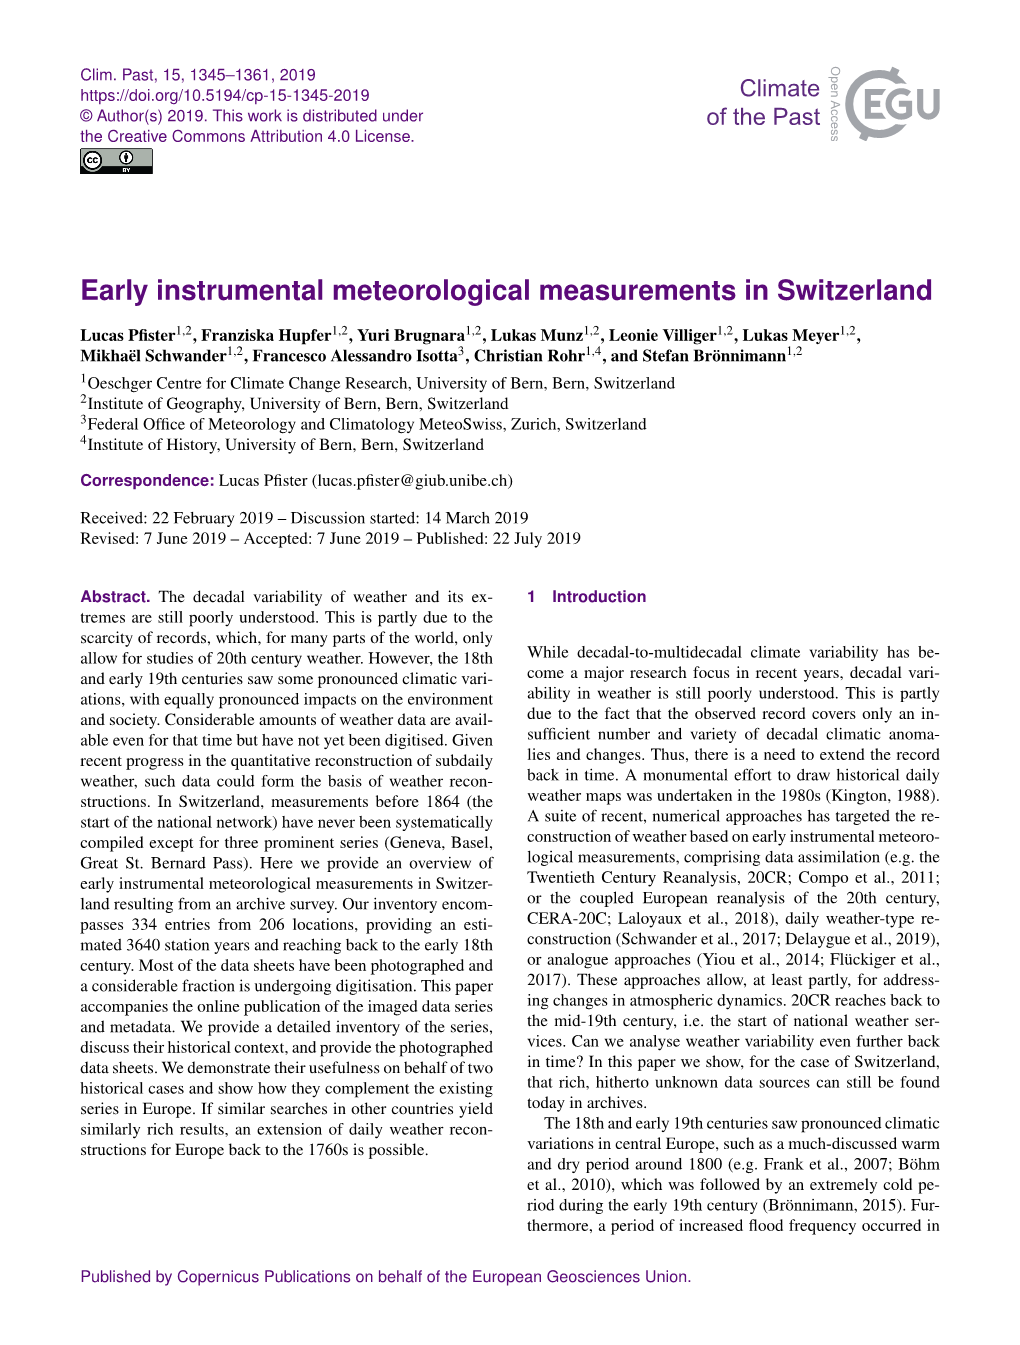 Early Instrumental Meteorological Measurements in Switzerland